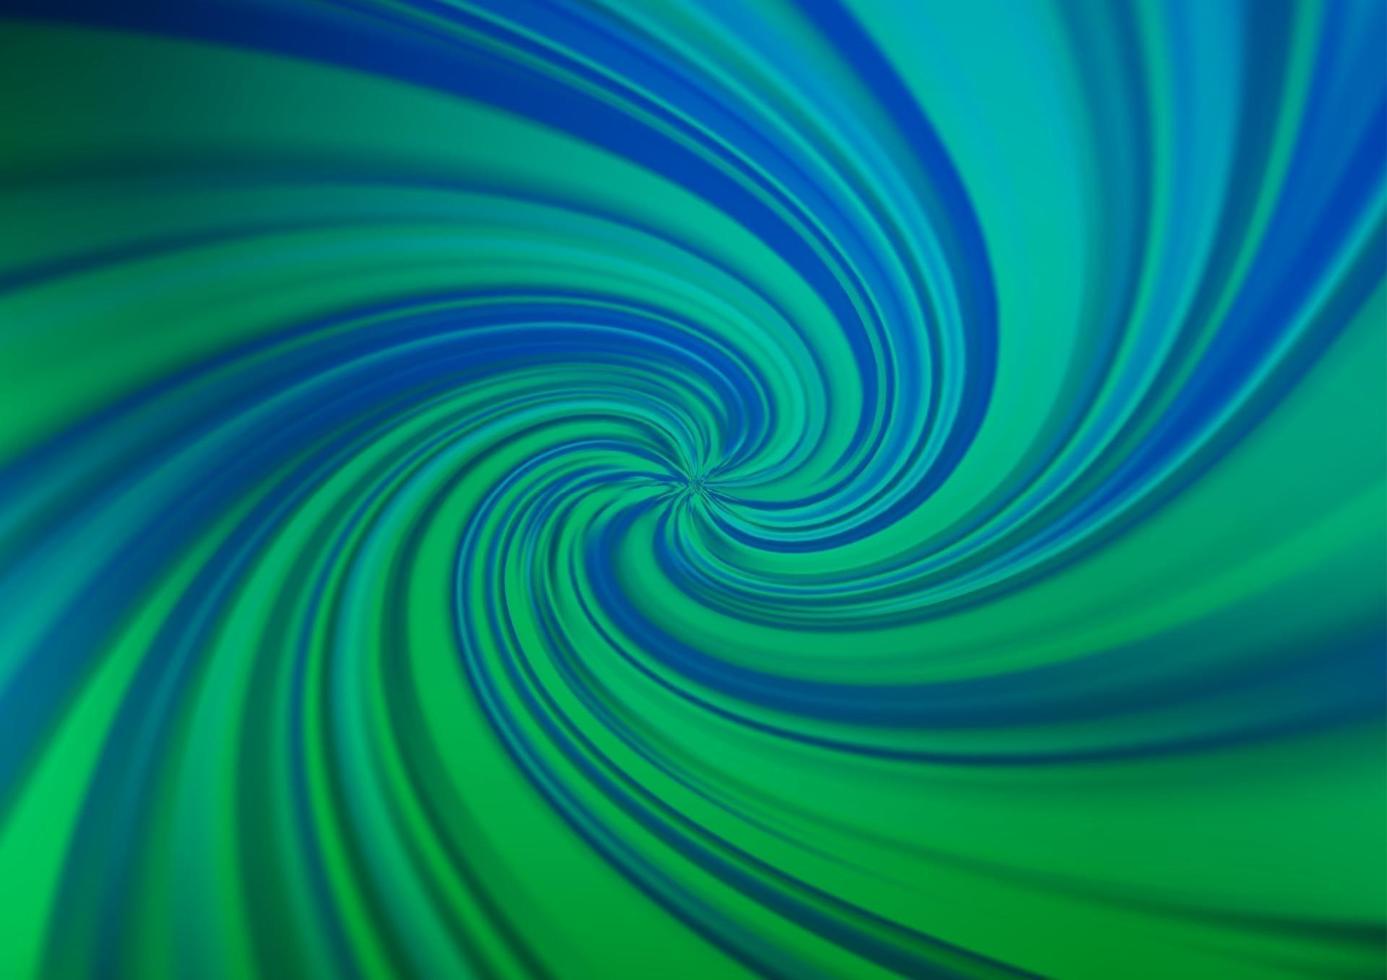 hellblauer, grüner Vektor abstrakter heller Hintergrund.